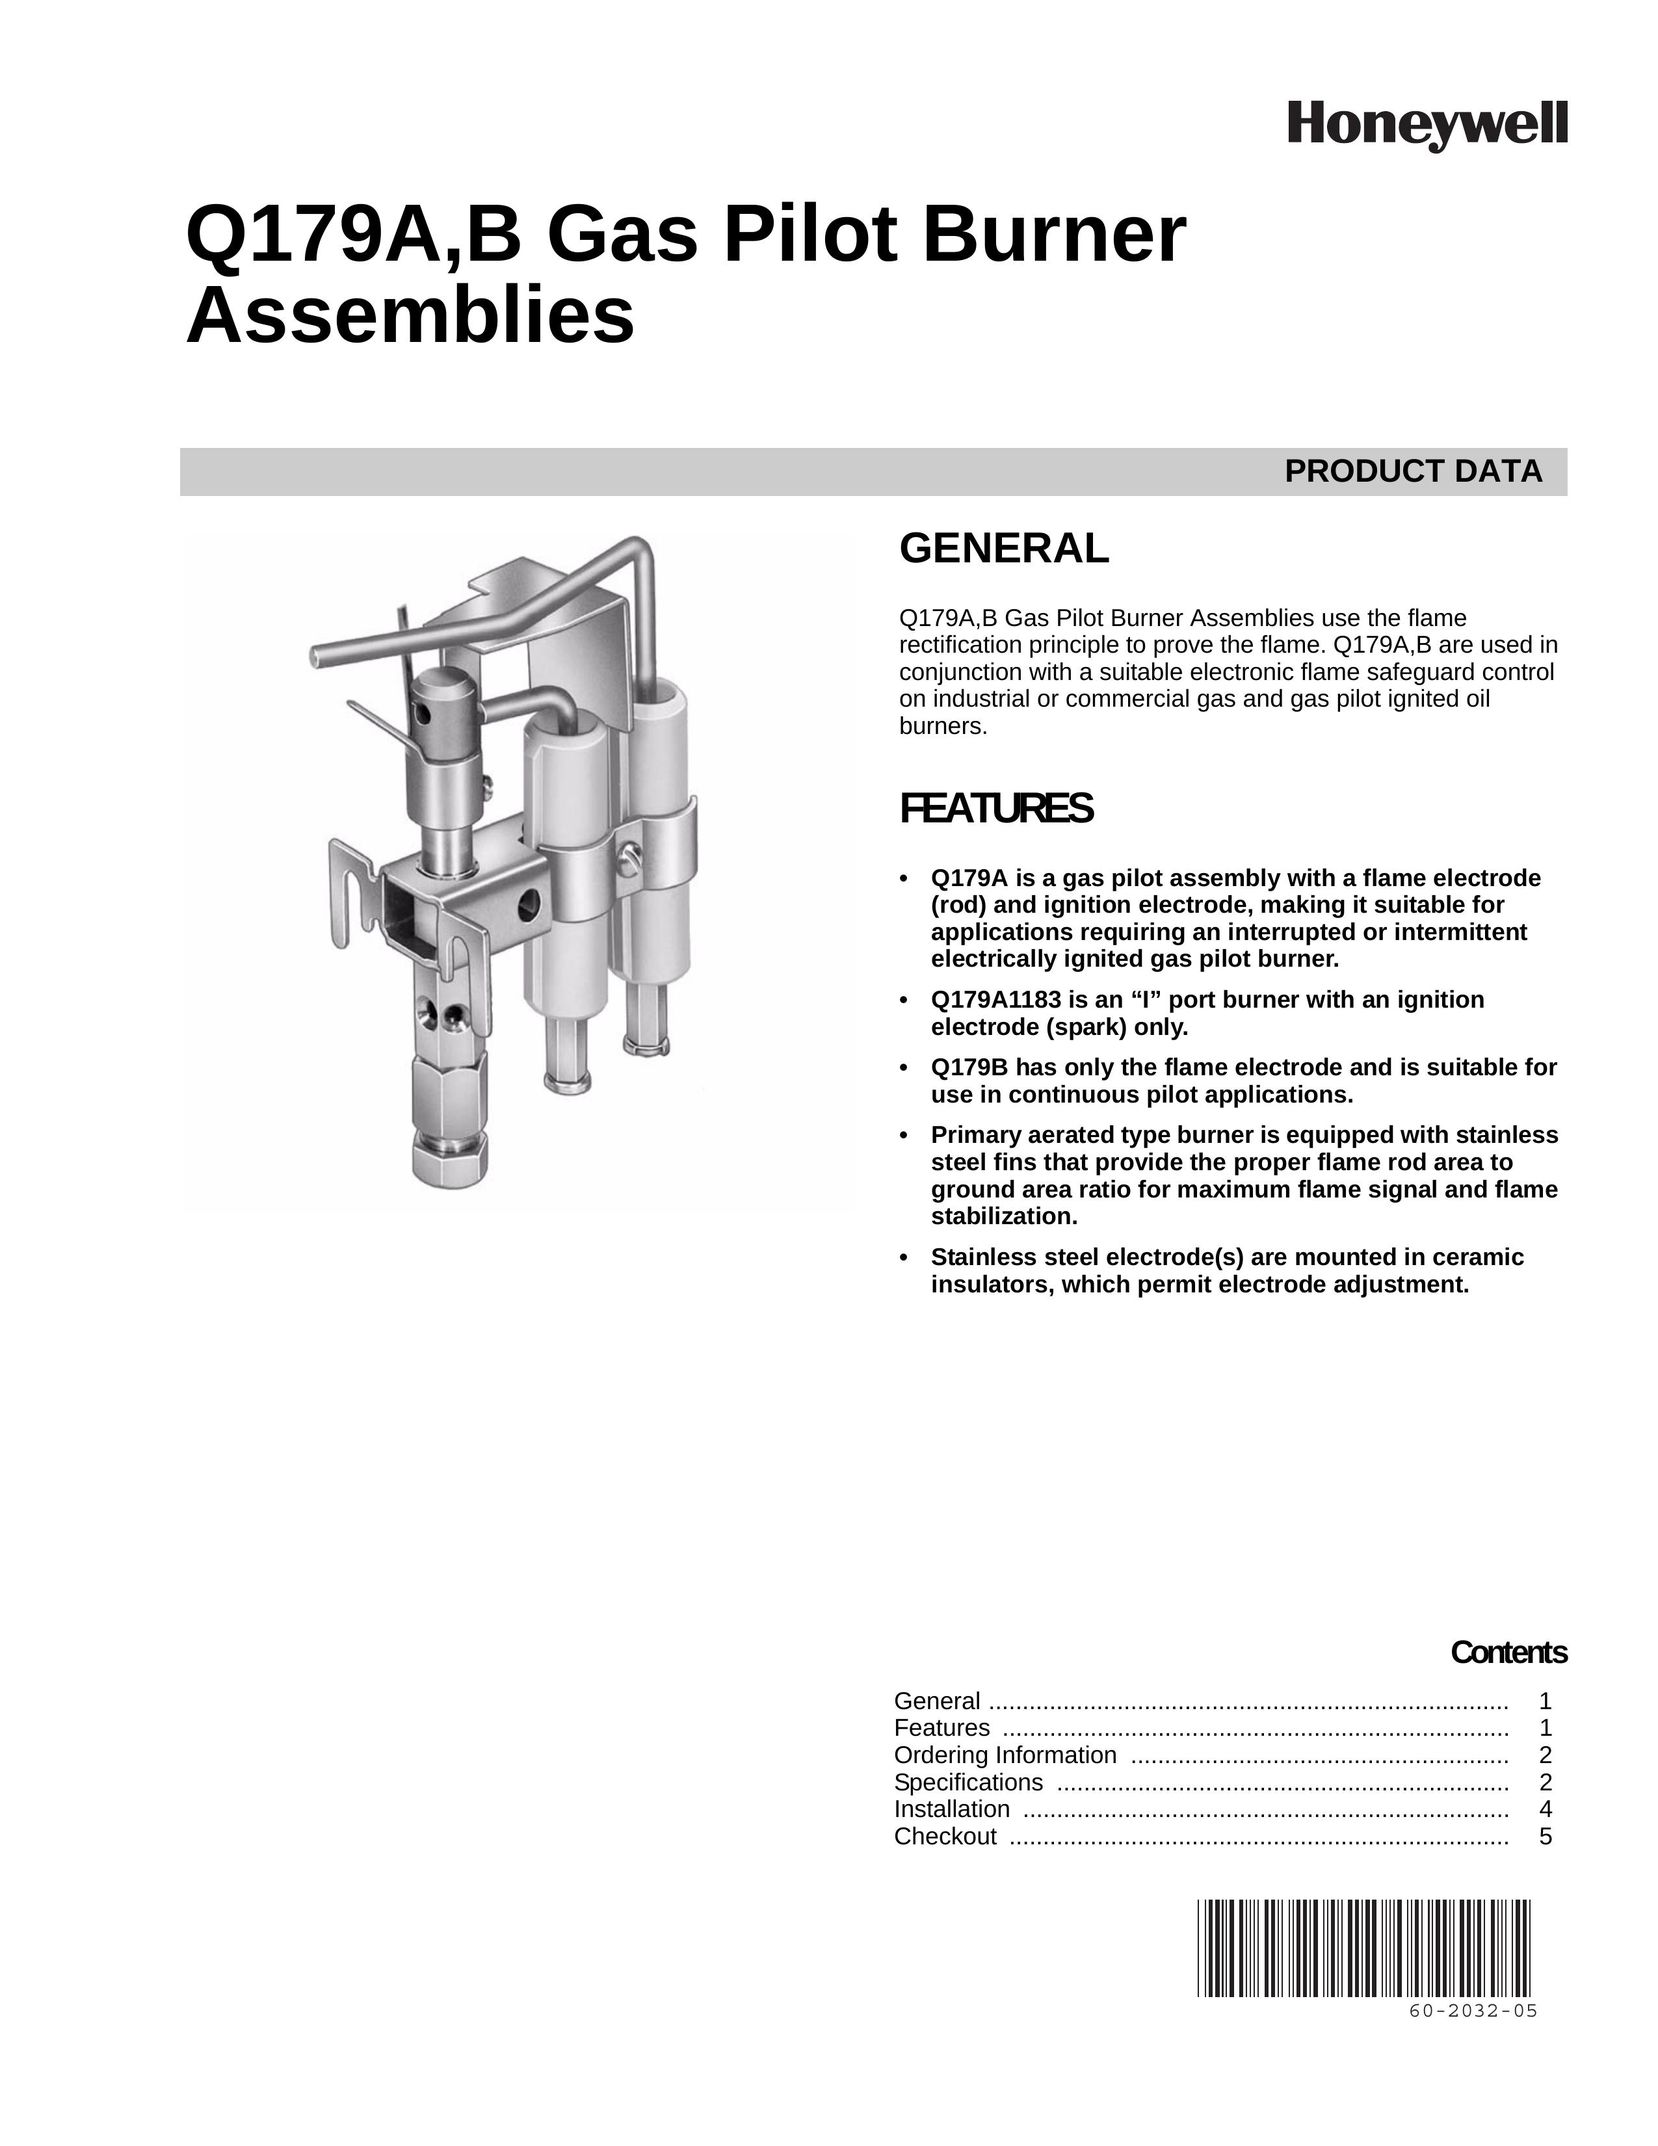 Honeywell Q179A Burner User Manual